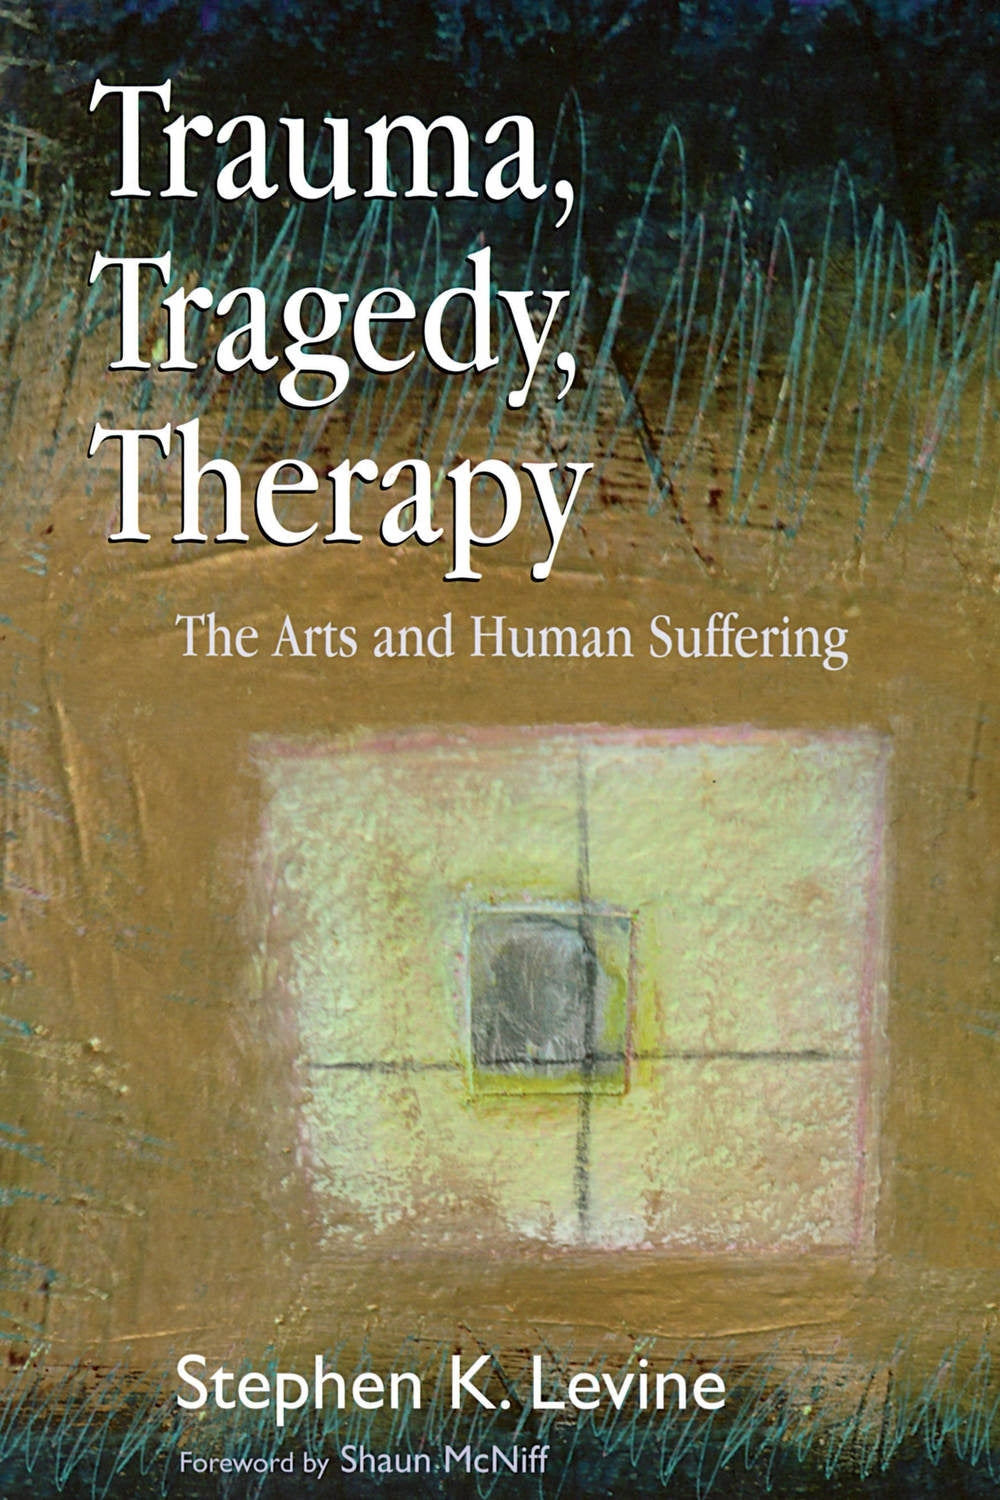 Trauma, Tragedy, Therapy by Shaun McNiff, Stephen K. Levine